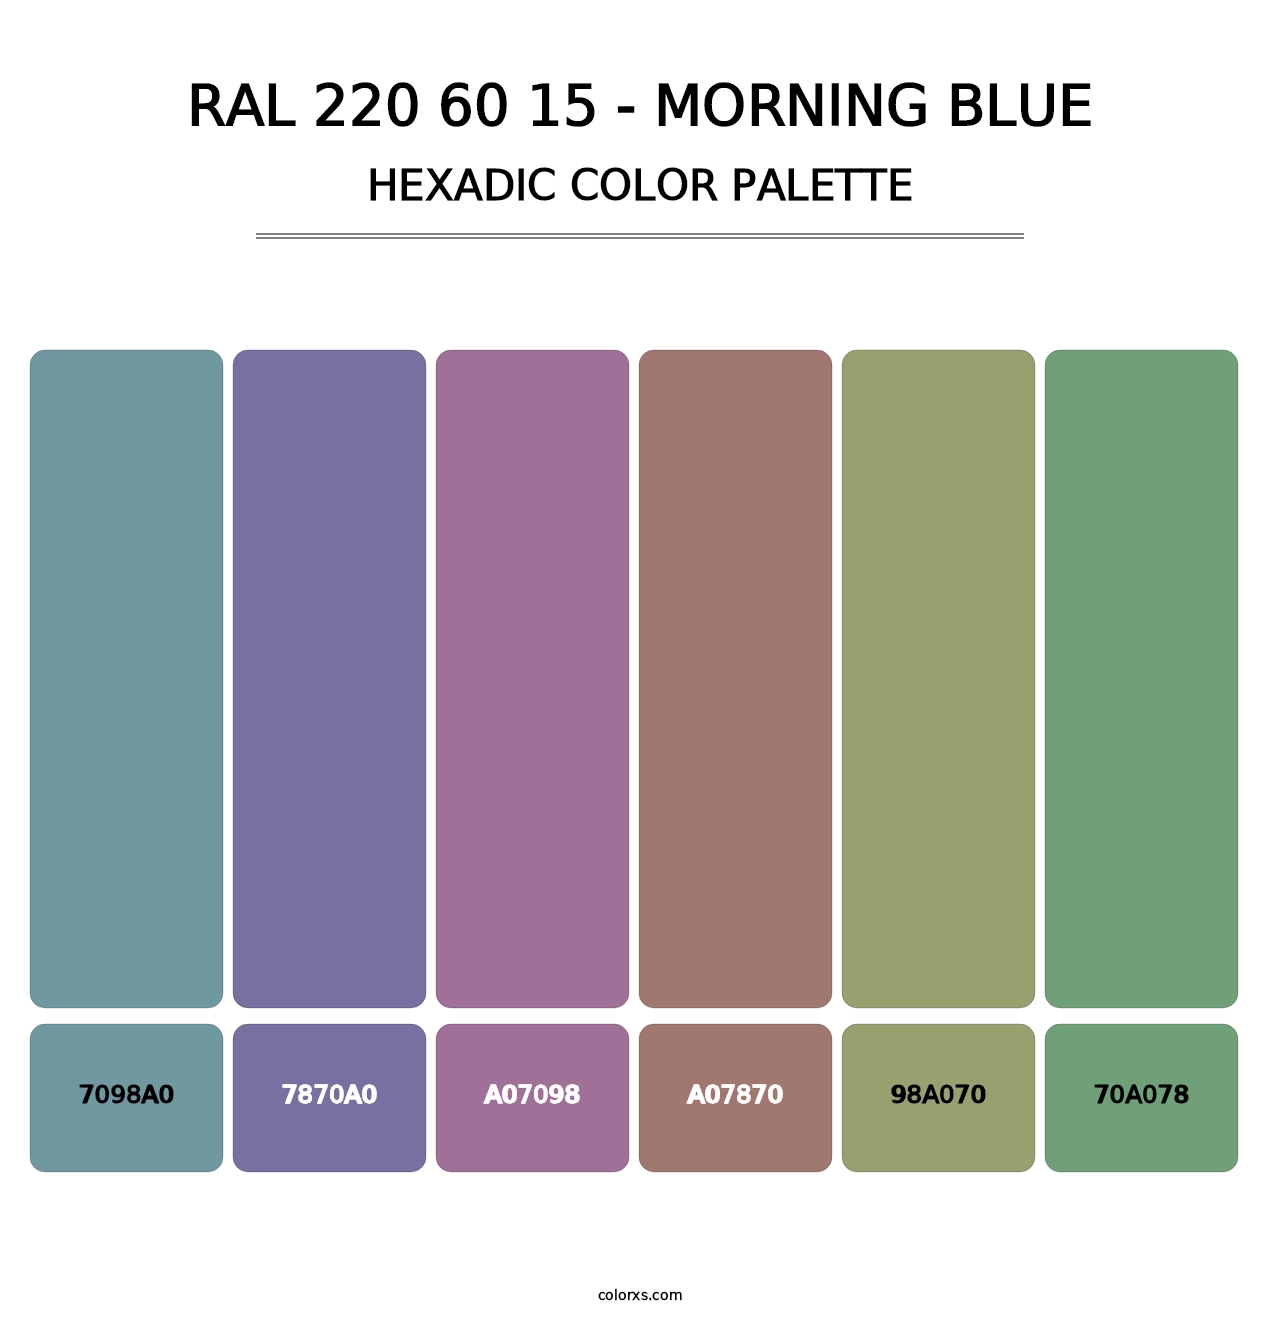 RAL 220 60 15 - Morning Blue - Hexadic Color Palette